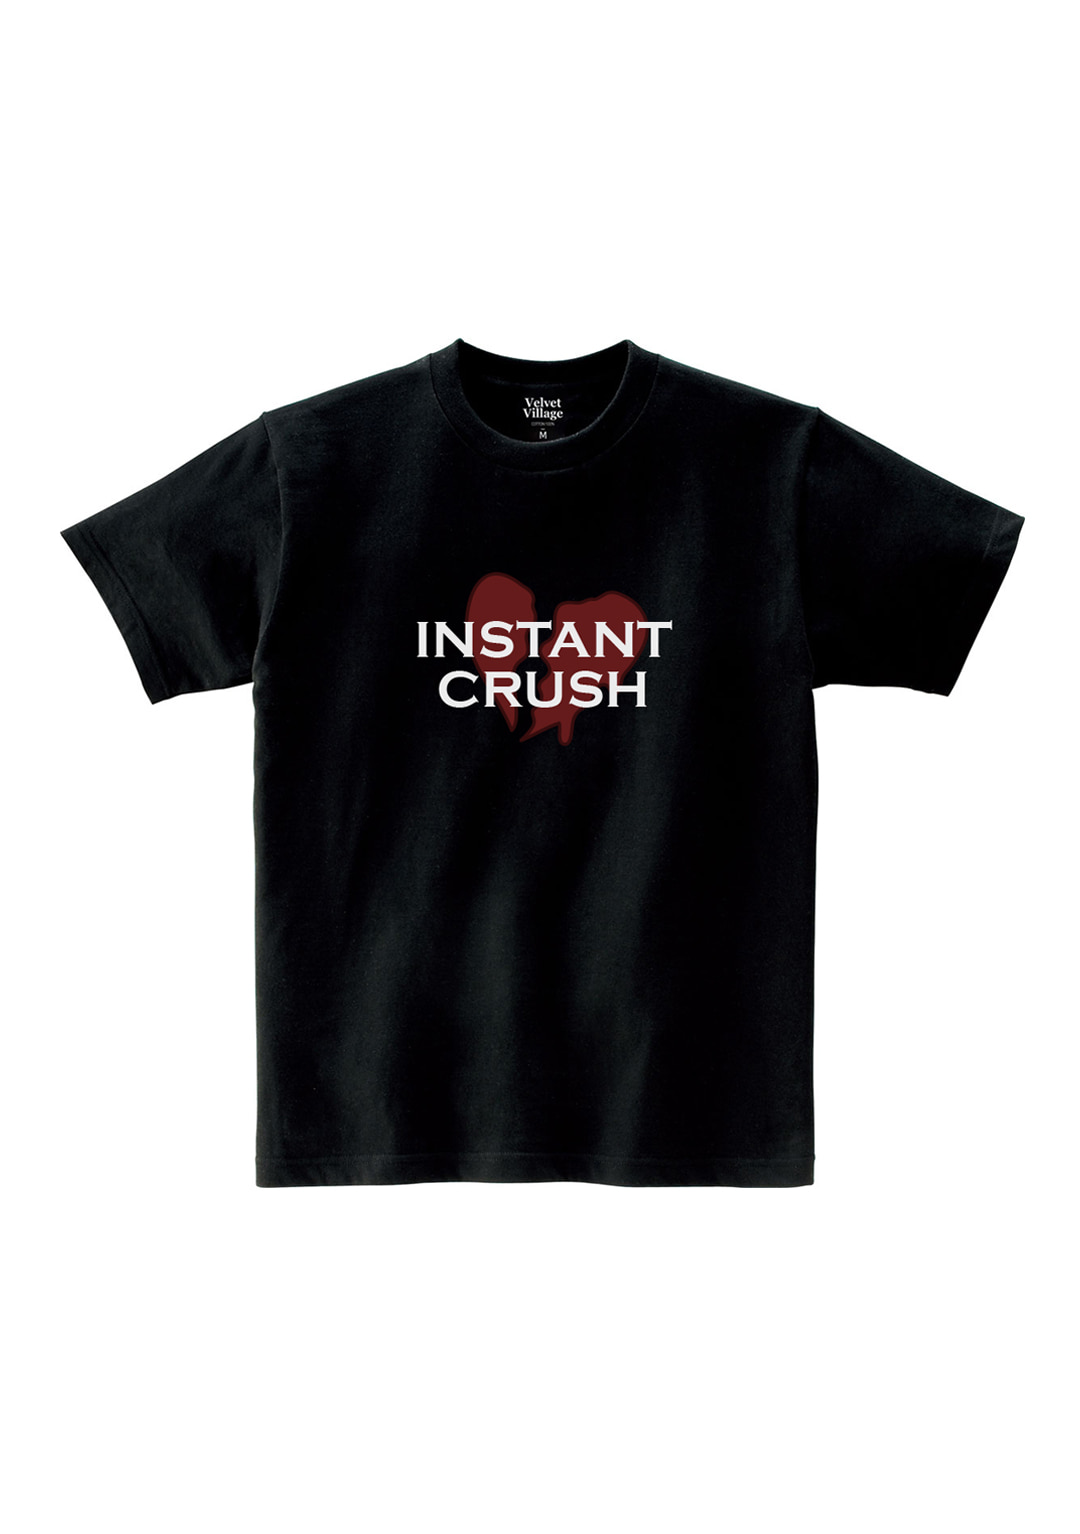 Instantcrush T-shirt (Black)